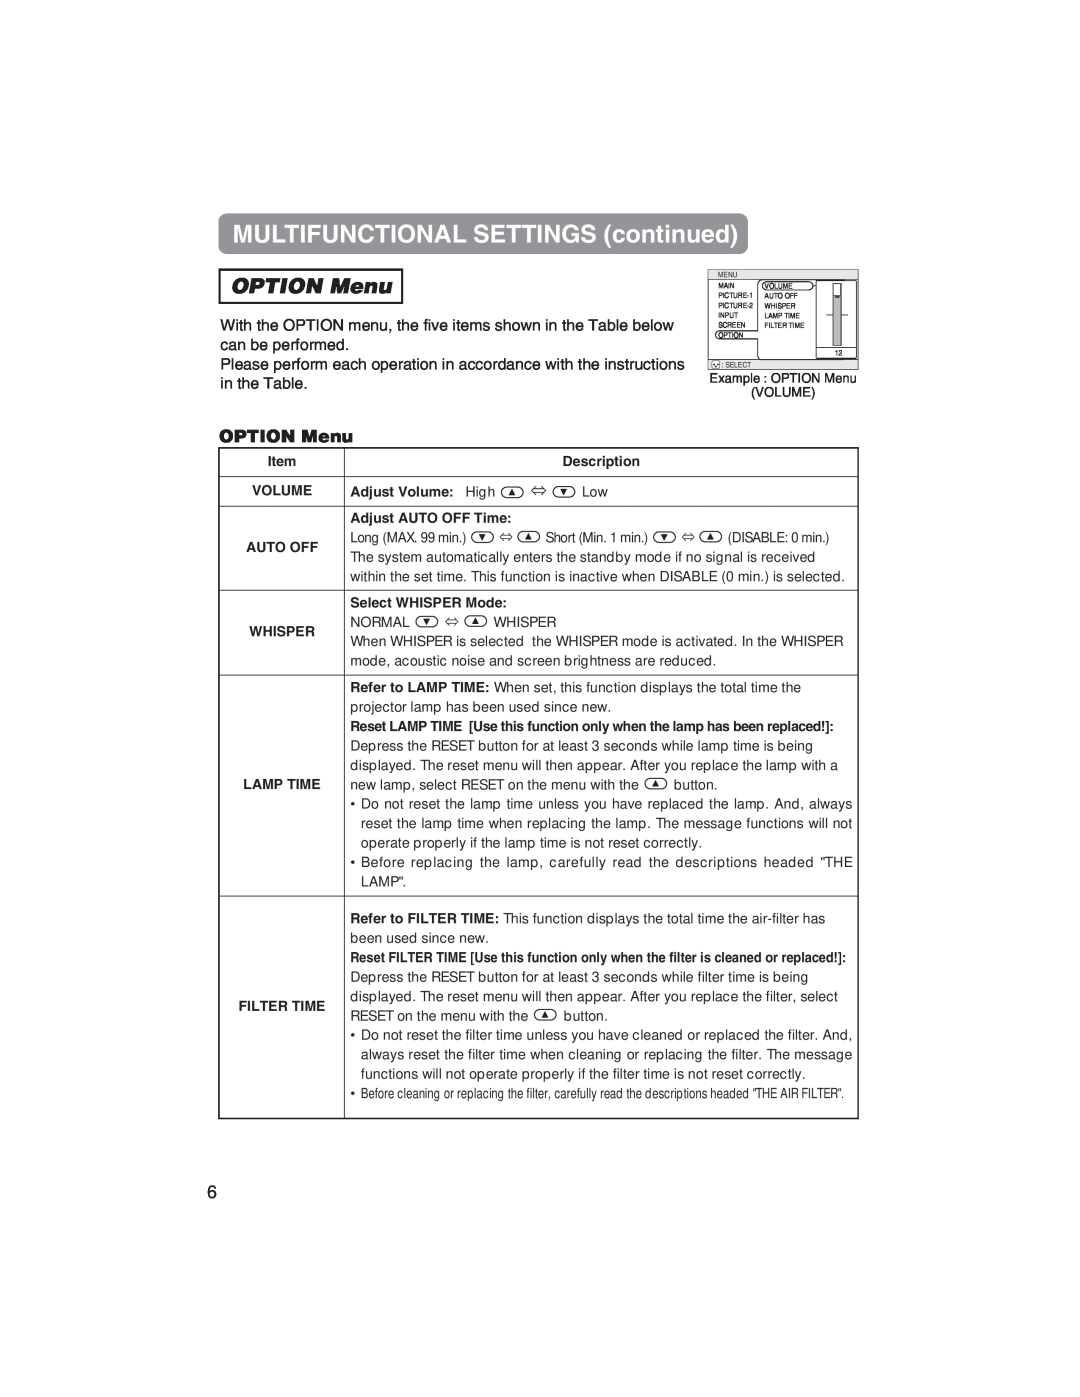 BOXLIGHT CP322ia user manual OPTION Menu, MULTIFUNCTIONAL SETTINGS continued 